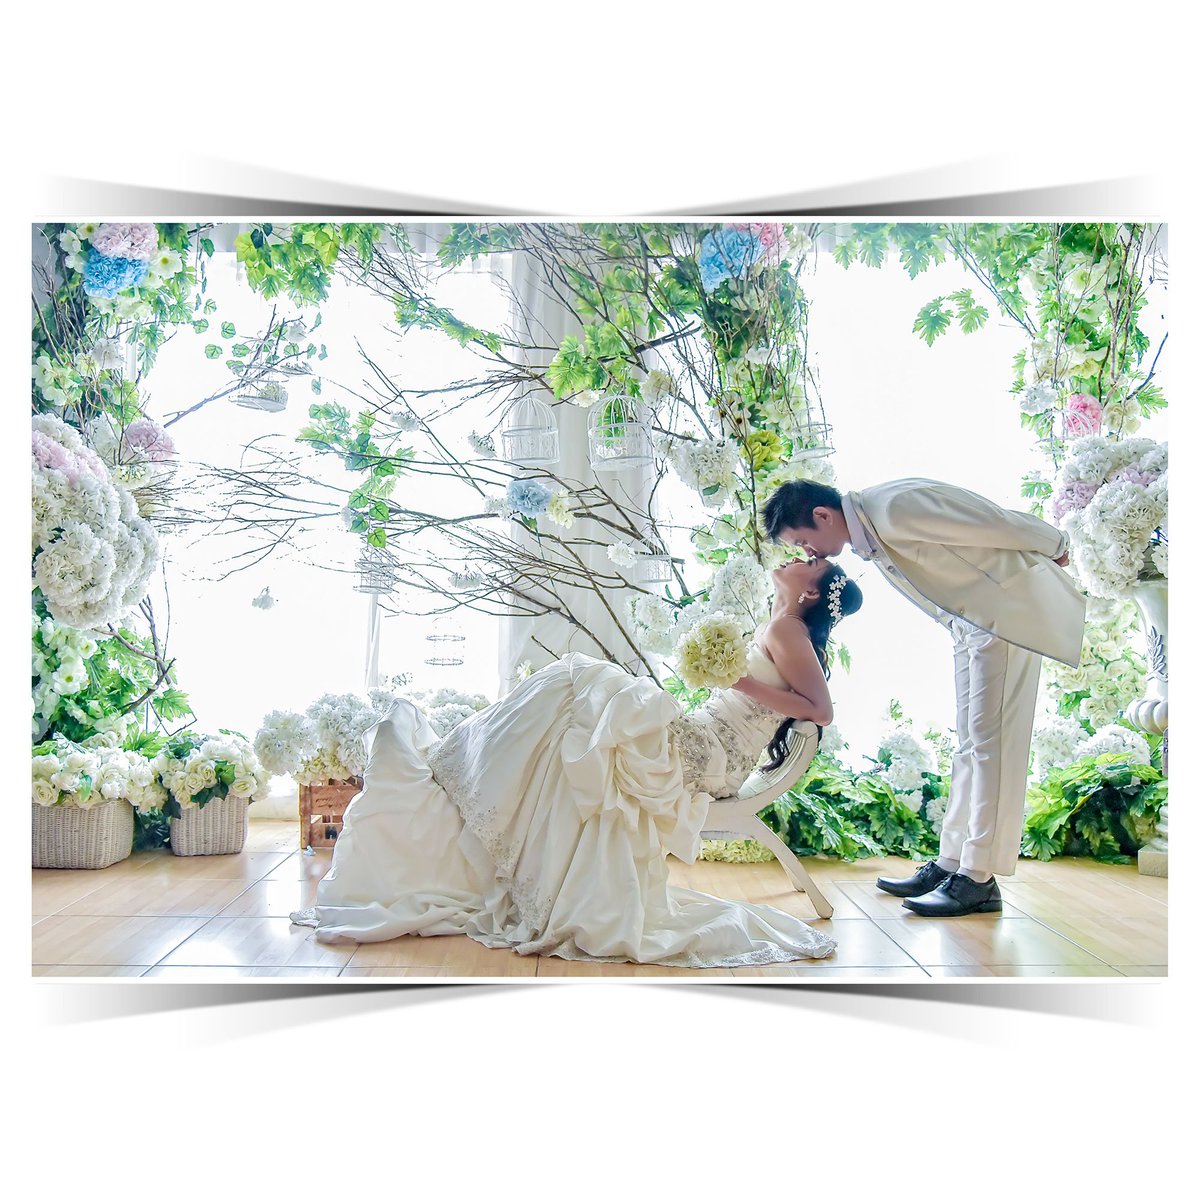 #weddingMalang #weddingBatu #preweddingmalang #preweddingBatu  #BaliWedding #Bromo #wedding #weddingPhotographer #WeddingInspiration